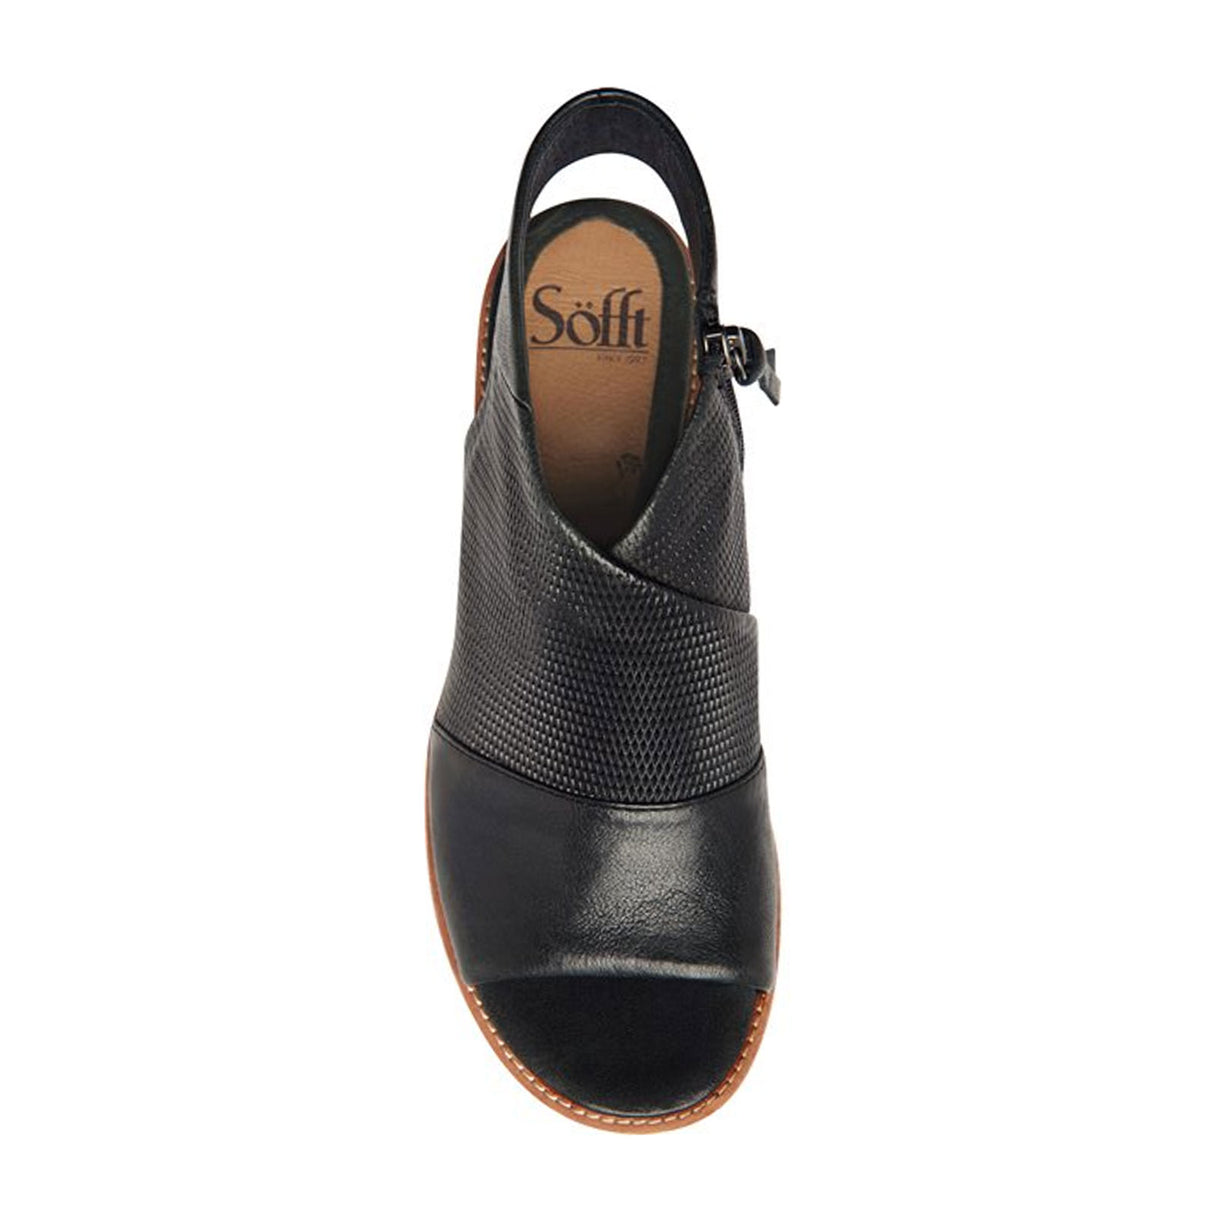 Sofft Natalia Sling Sandal (Women) - Black Sandals - Heel/Wedge - The Heel Shoe Fitters